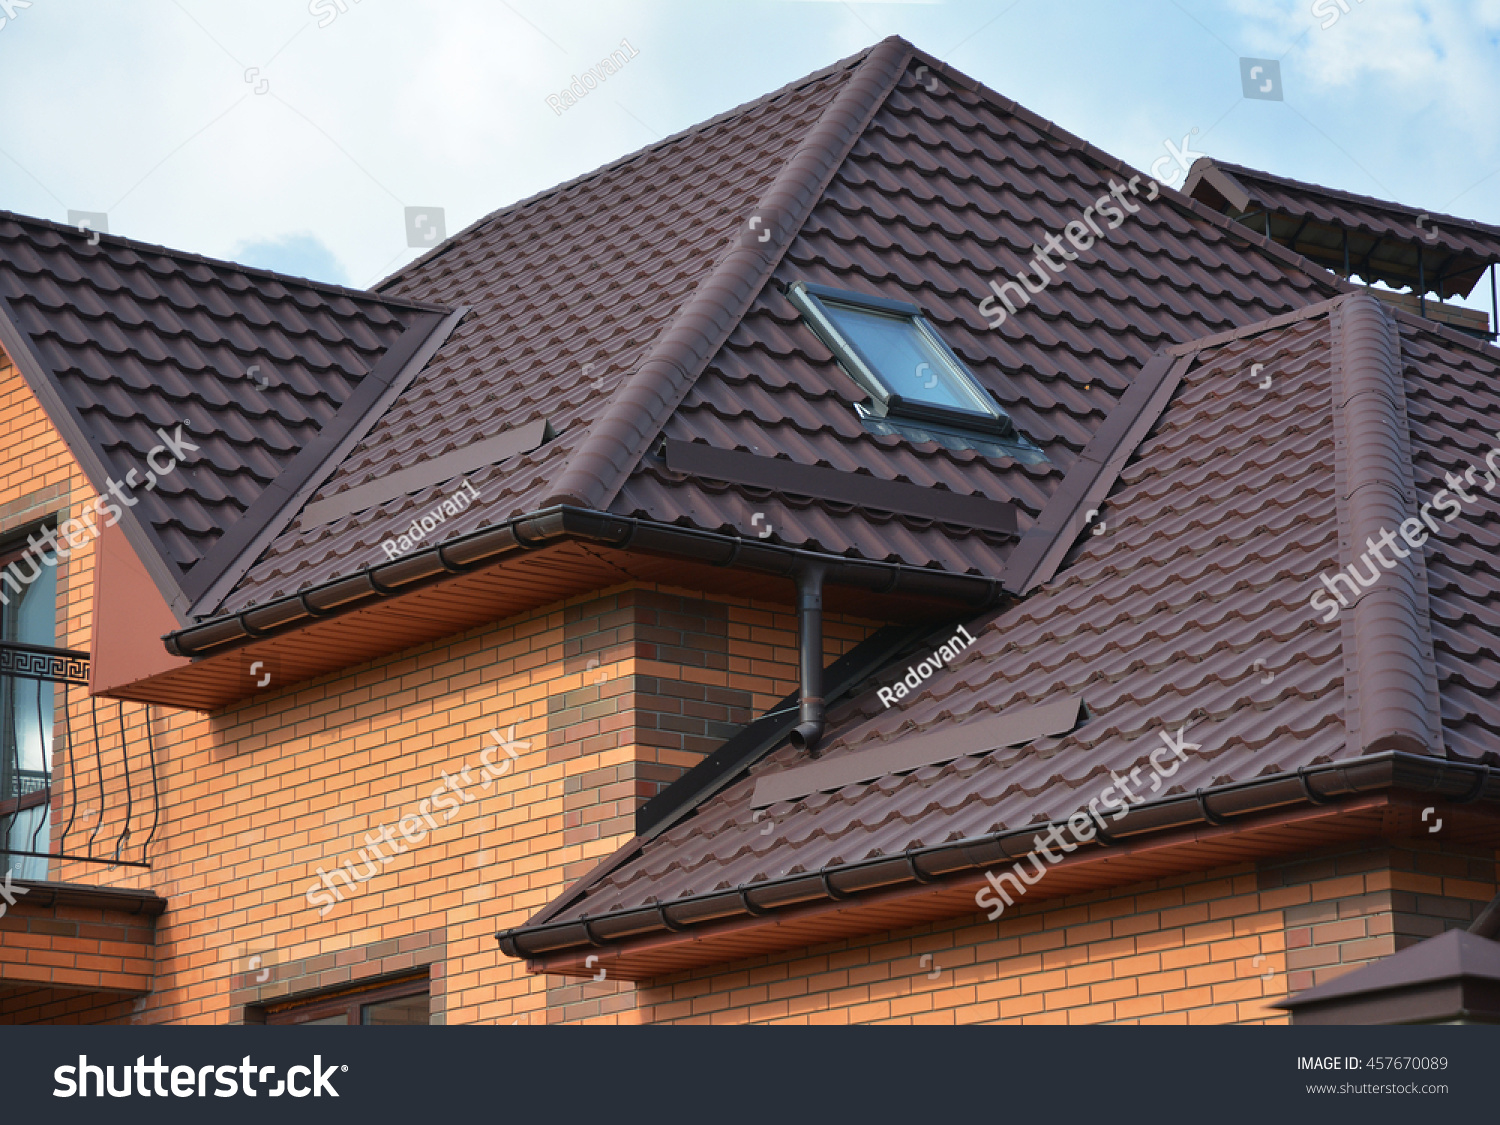 New Roofing Construction Attic Skylights Rain Stock Photo Edit Now 457670089